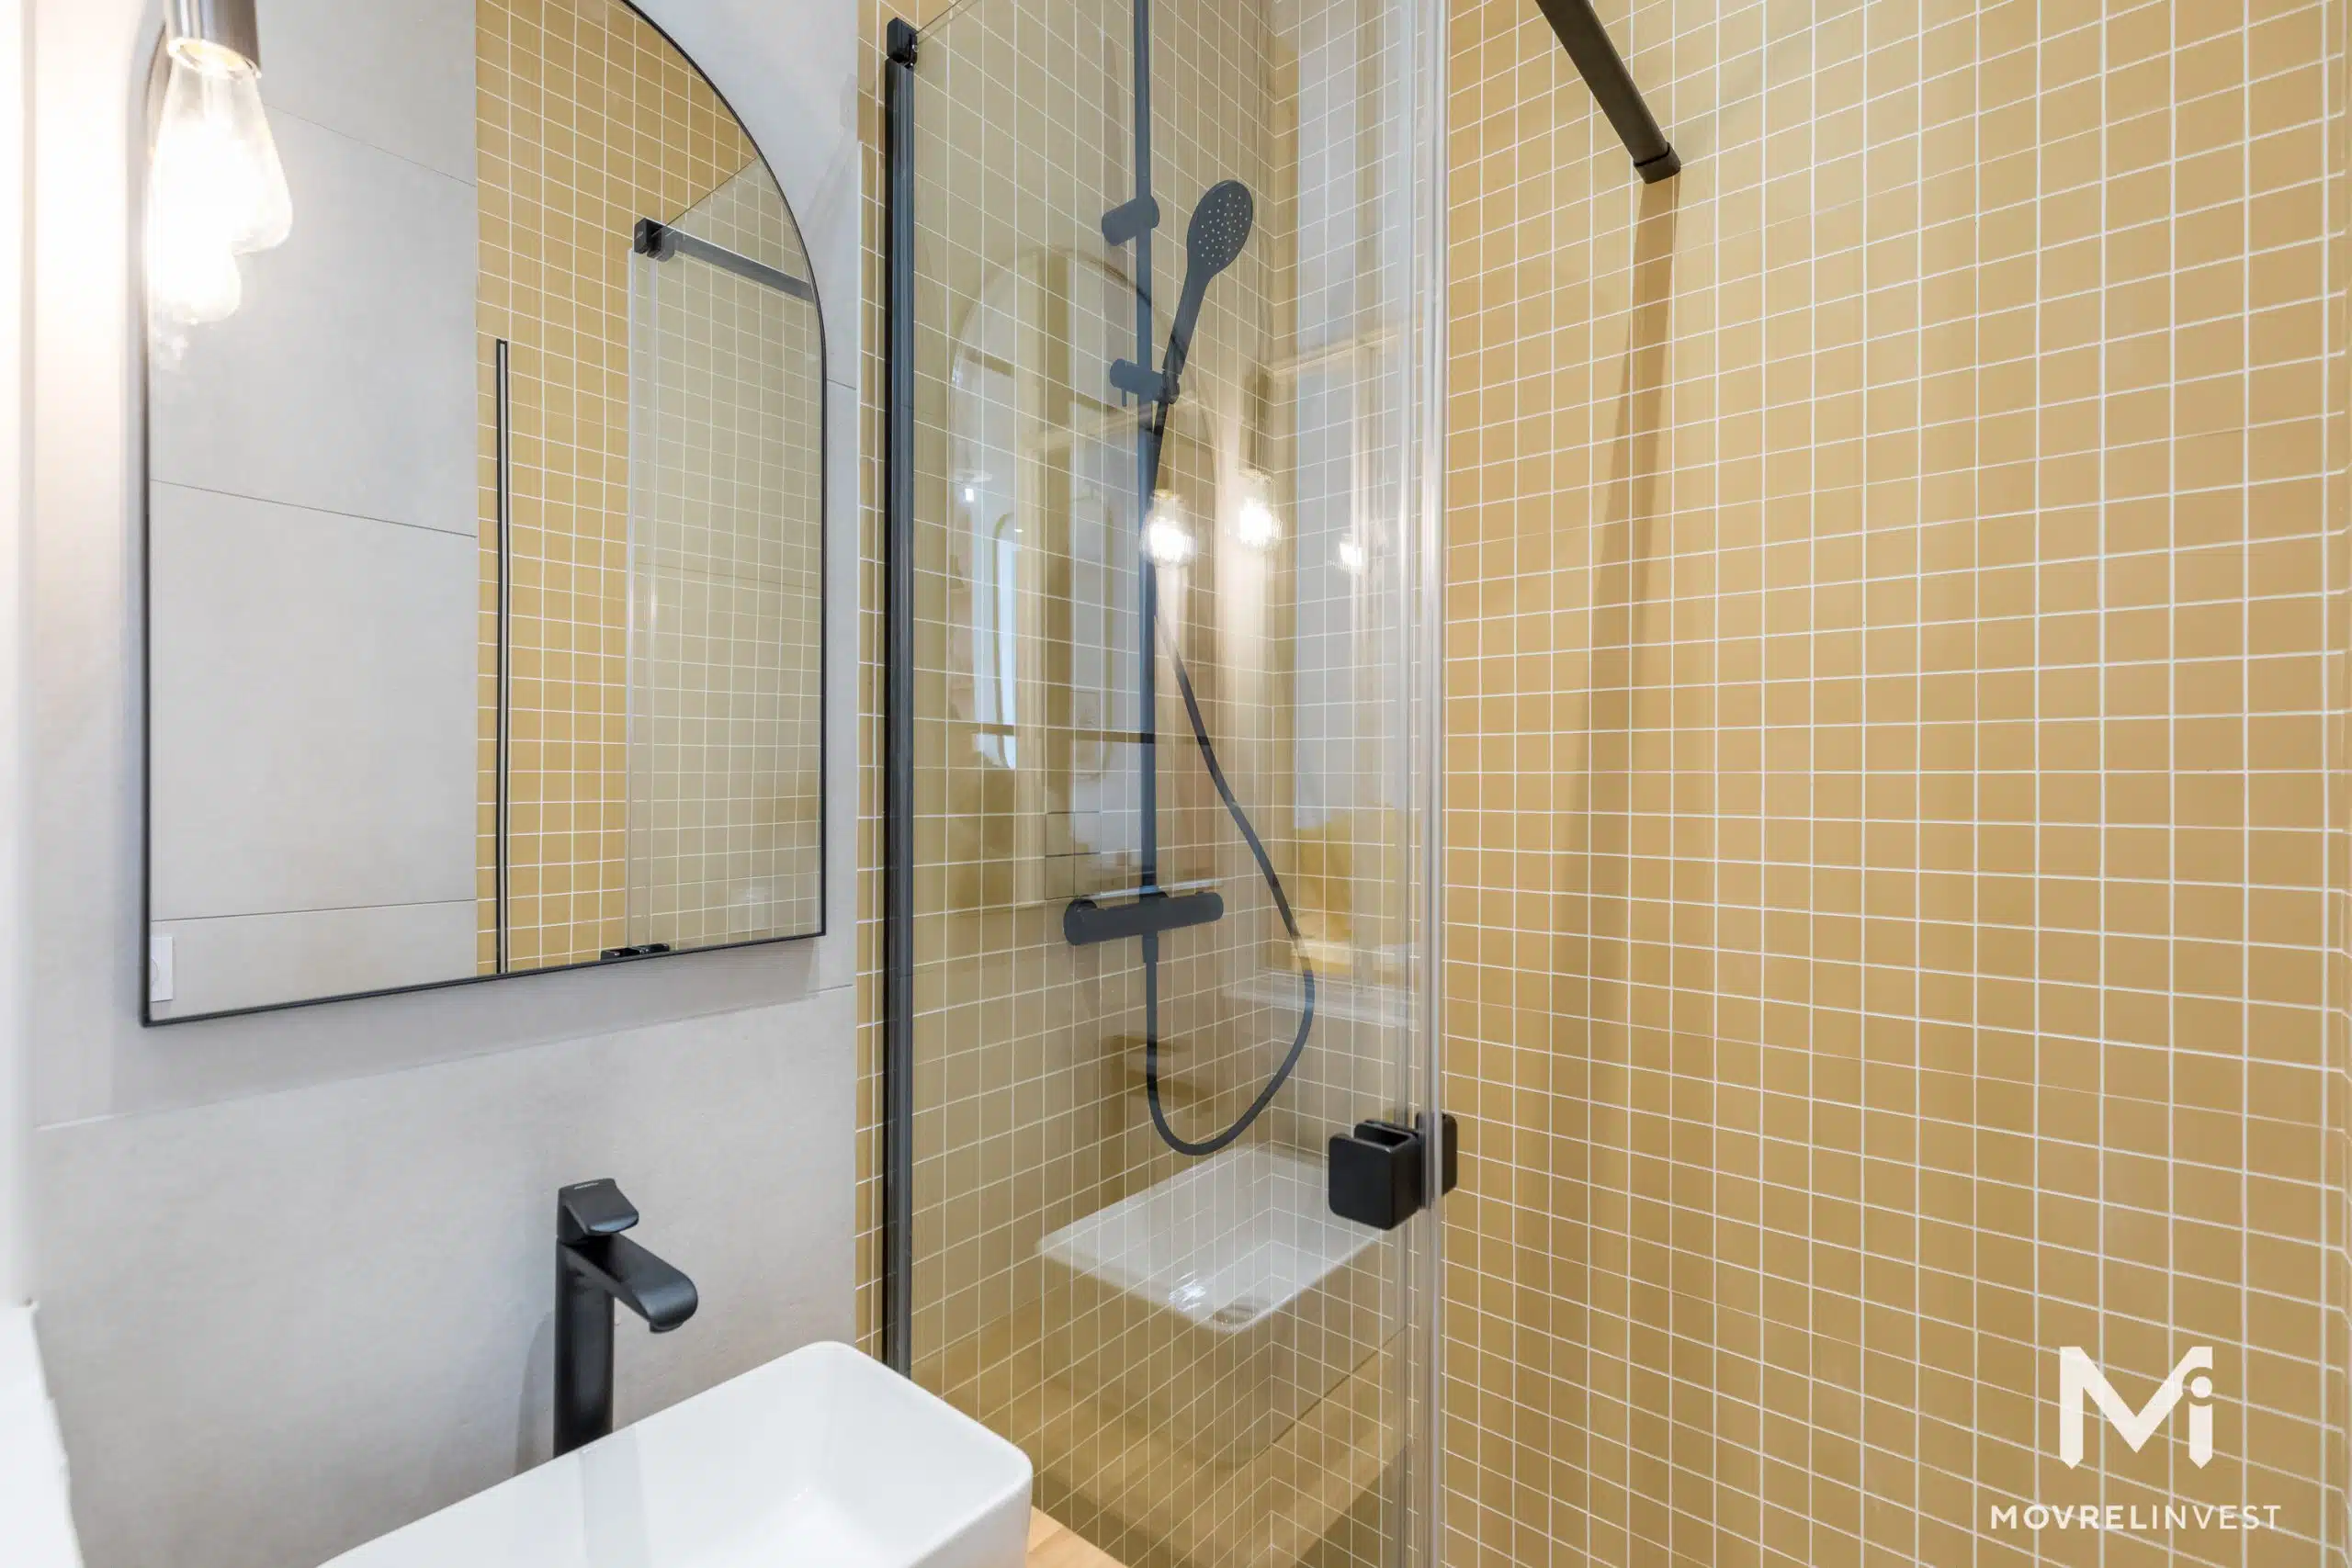 Salle de bain moderne avec douche italienne carrelée jaune.